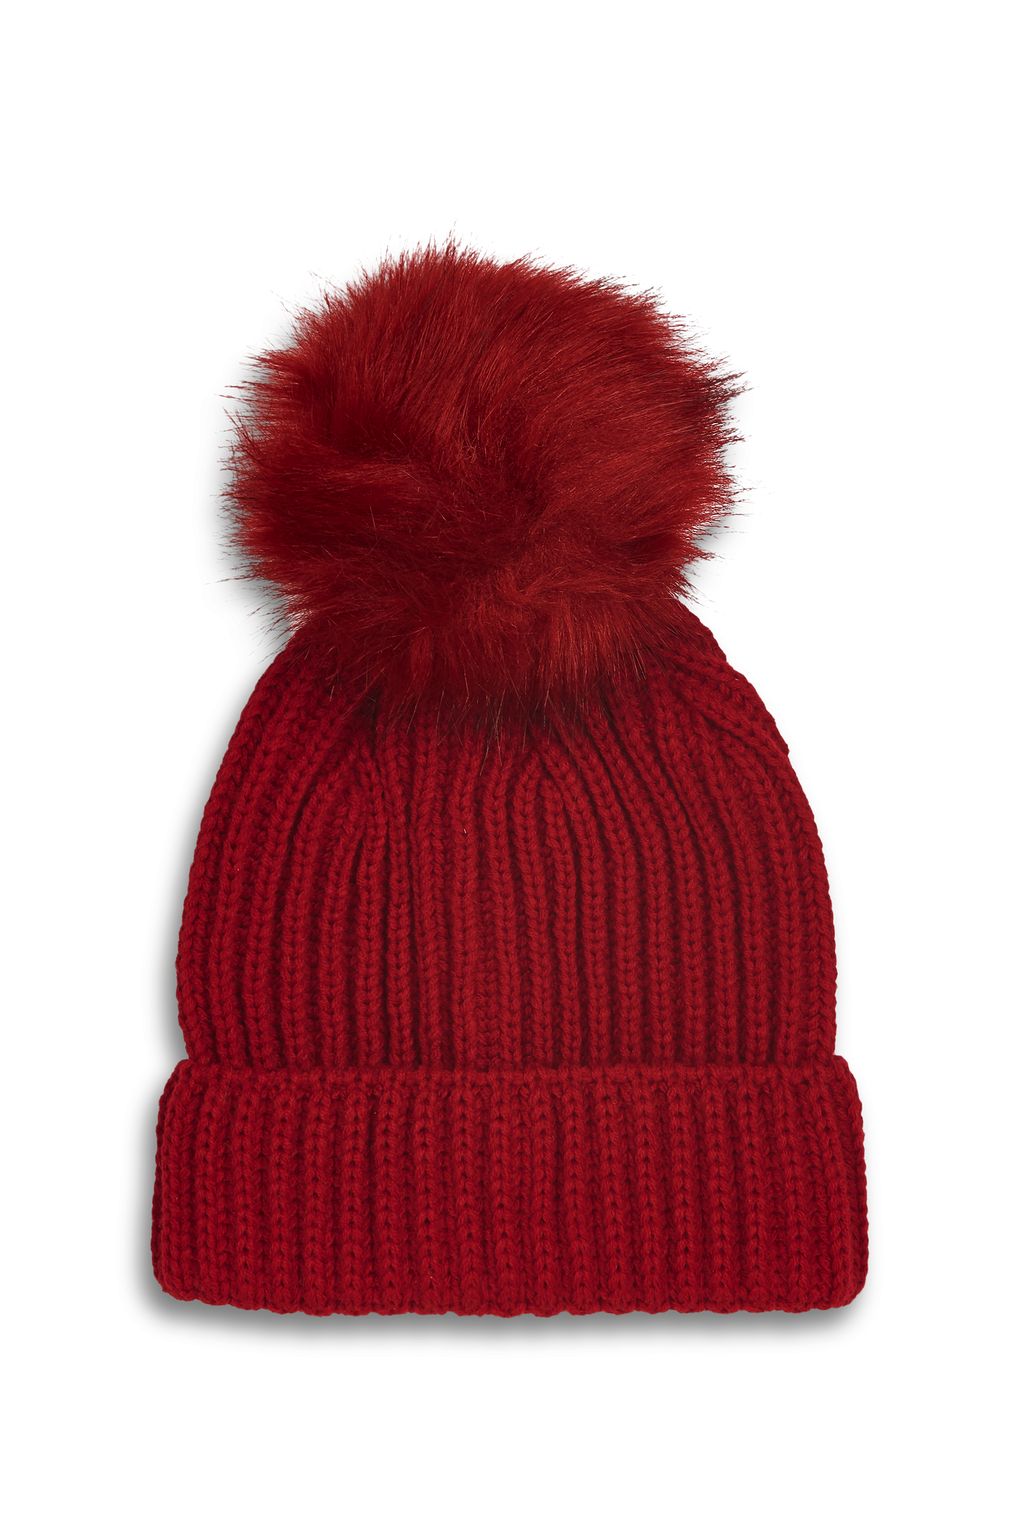 Topshop Red Bobble Hat with Fur Pom Pom 